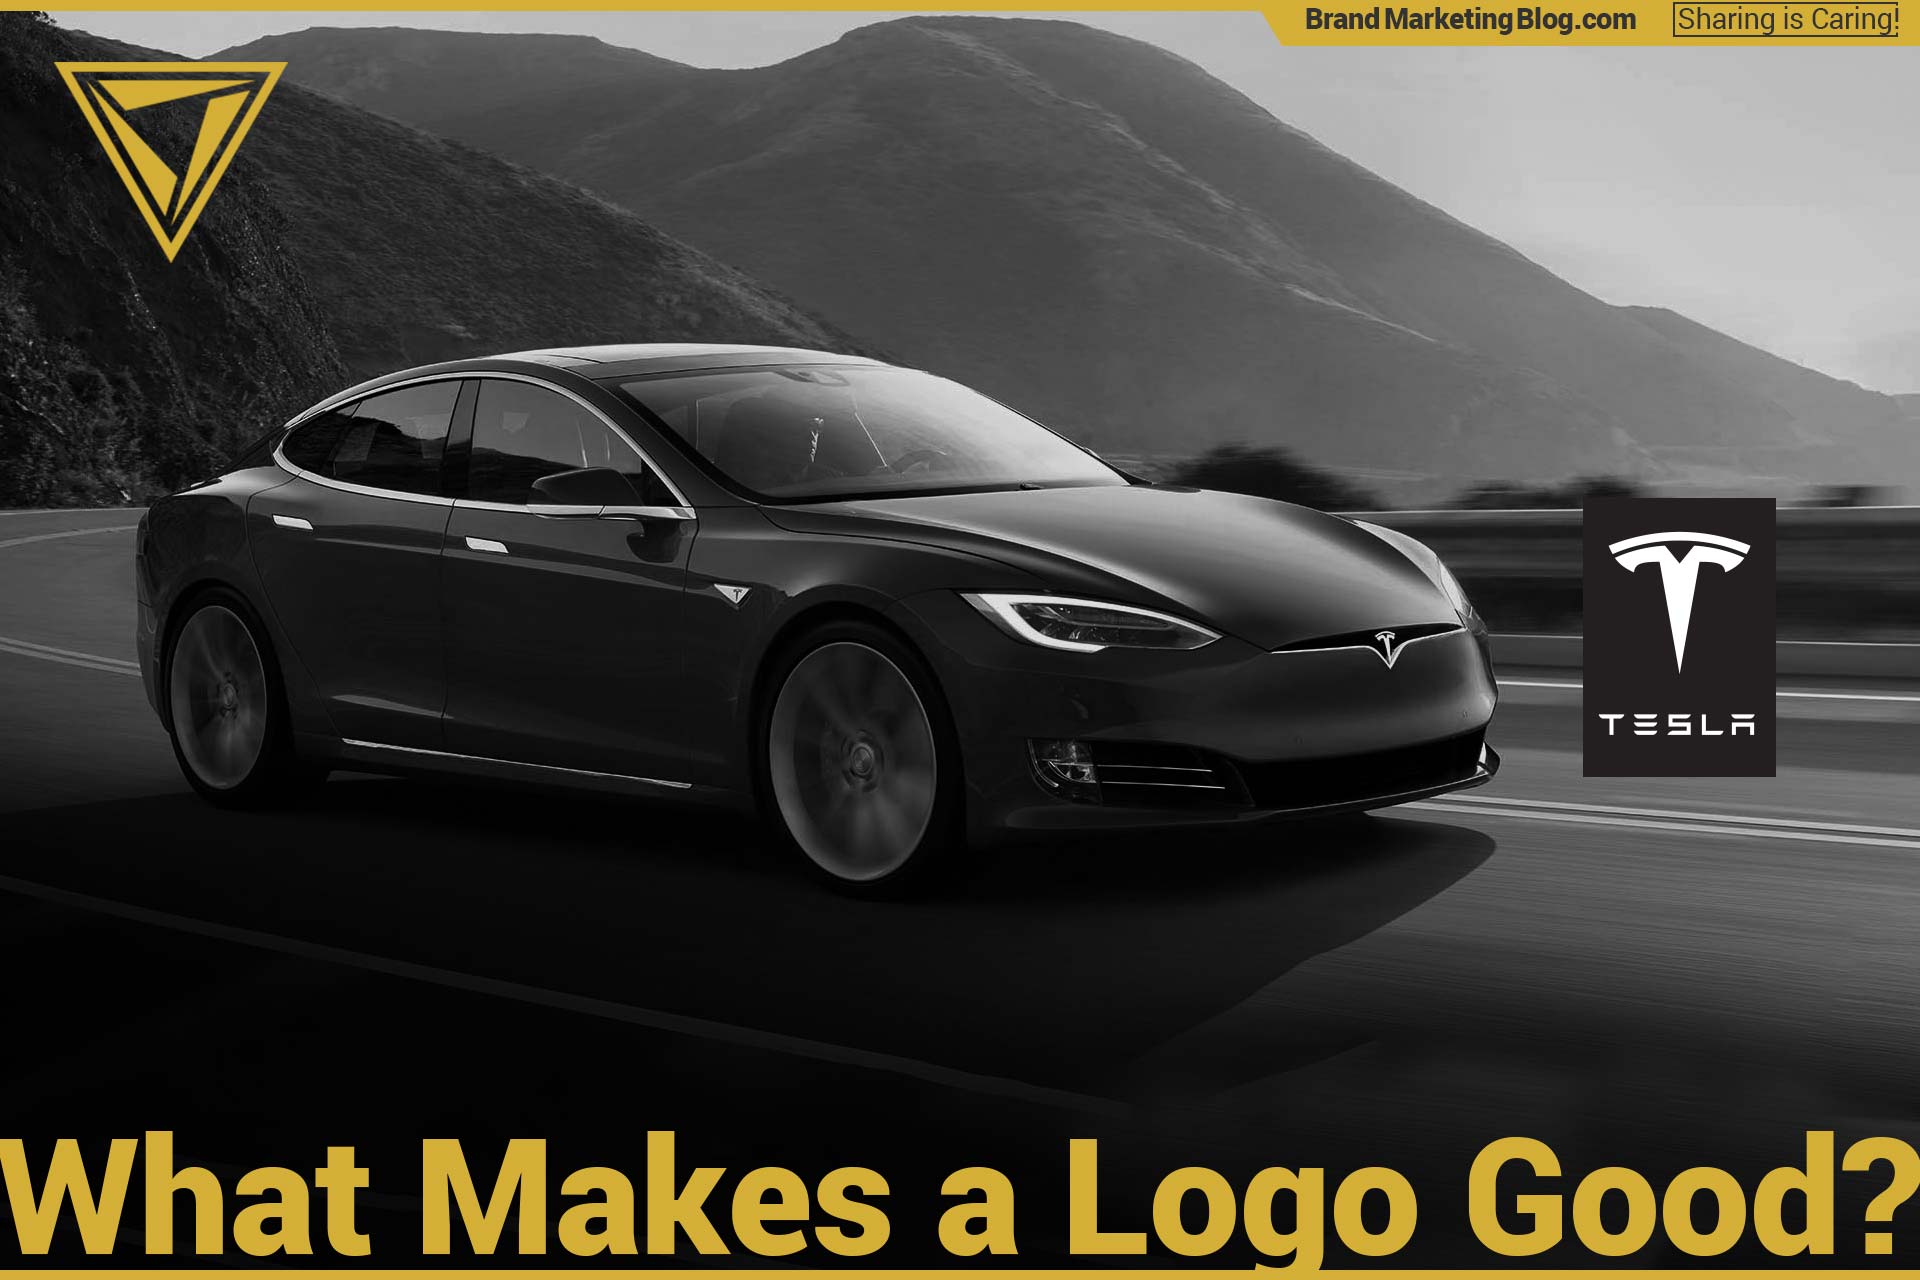 What makes a good logo? Tesla Model S and Tesla logo